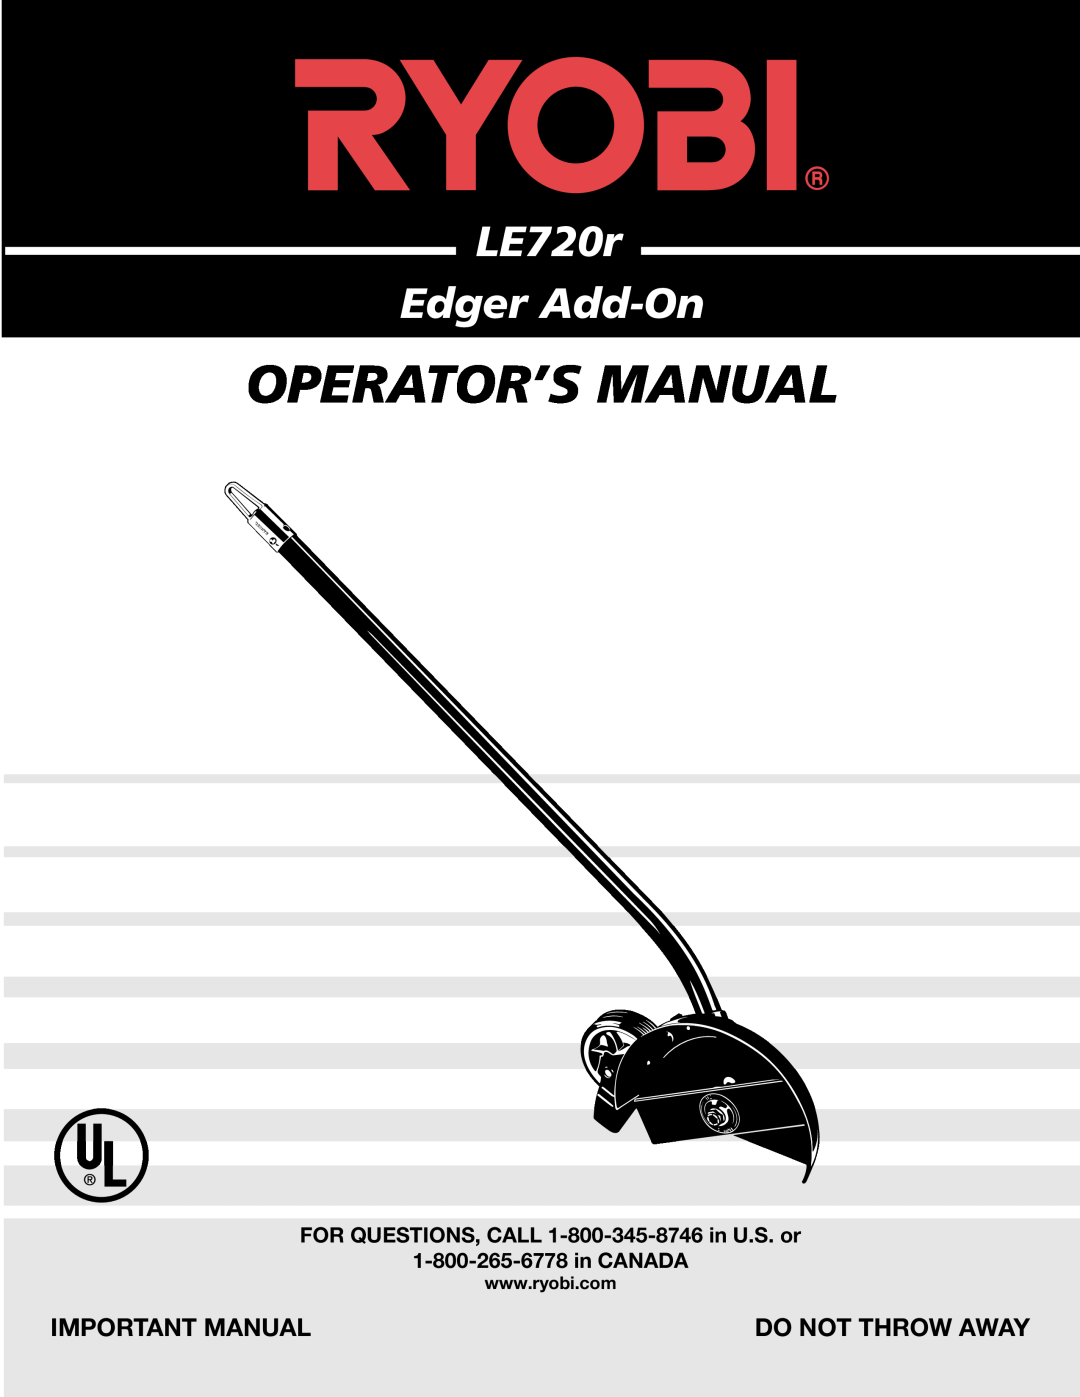 Ryobi manual Important Manual, Operator’S Manual, LE720r Edger Add-On, Do Not Throw Away 